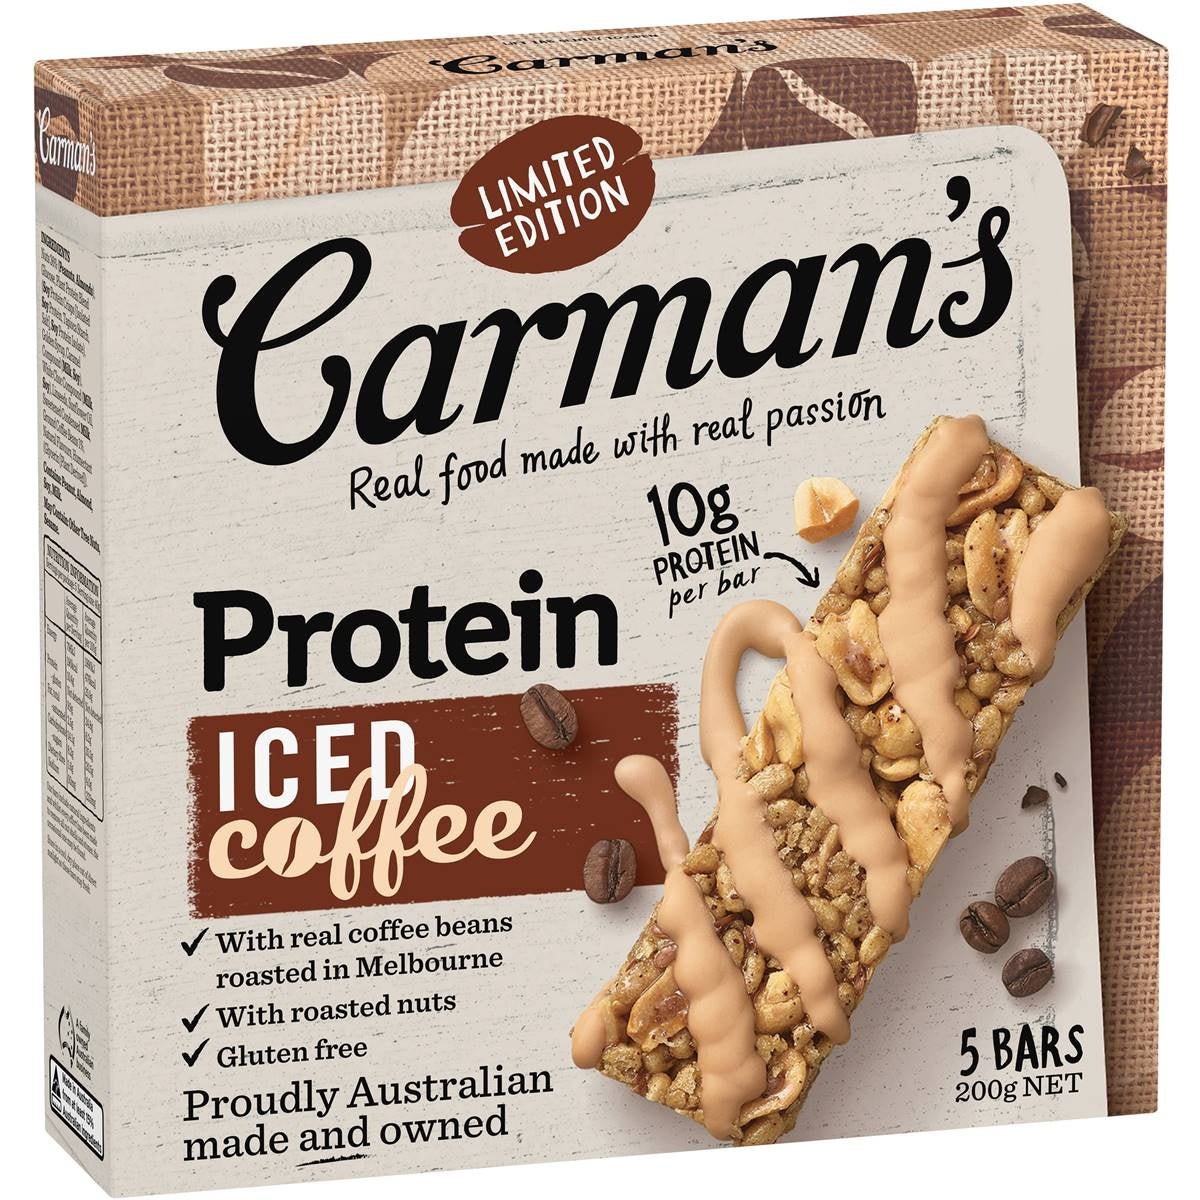 Carman's Protein Bars Iced Coffee 5pk